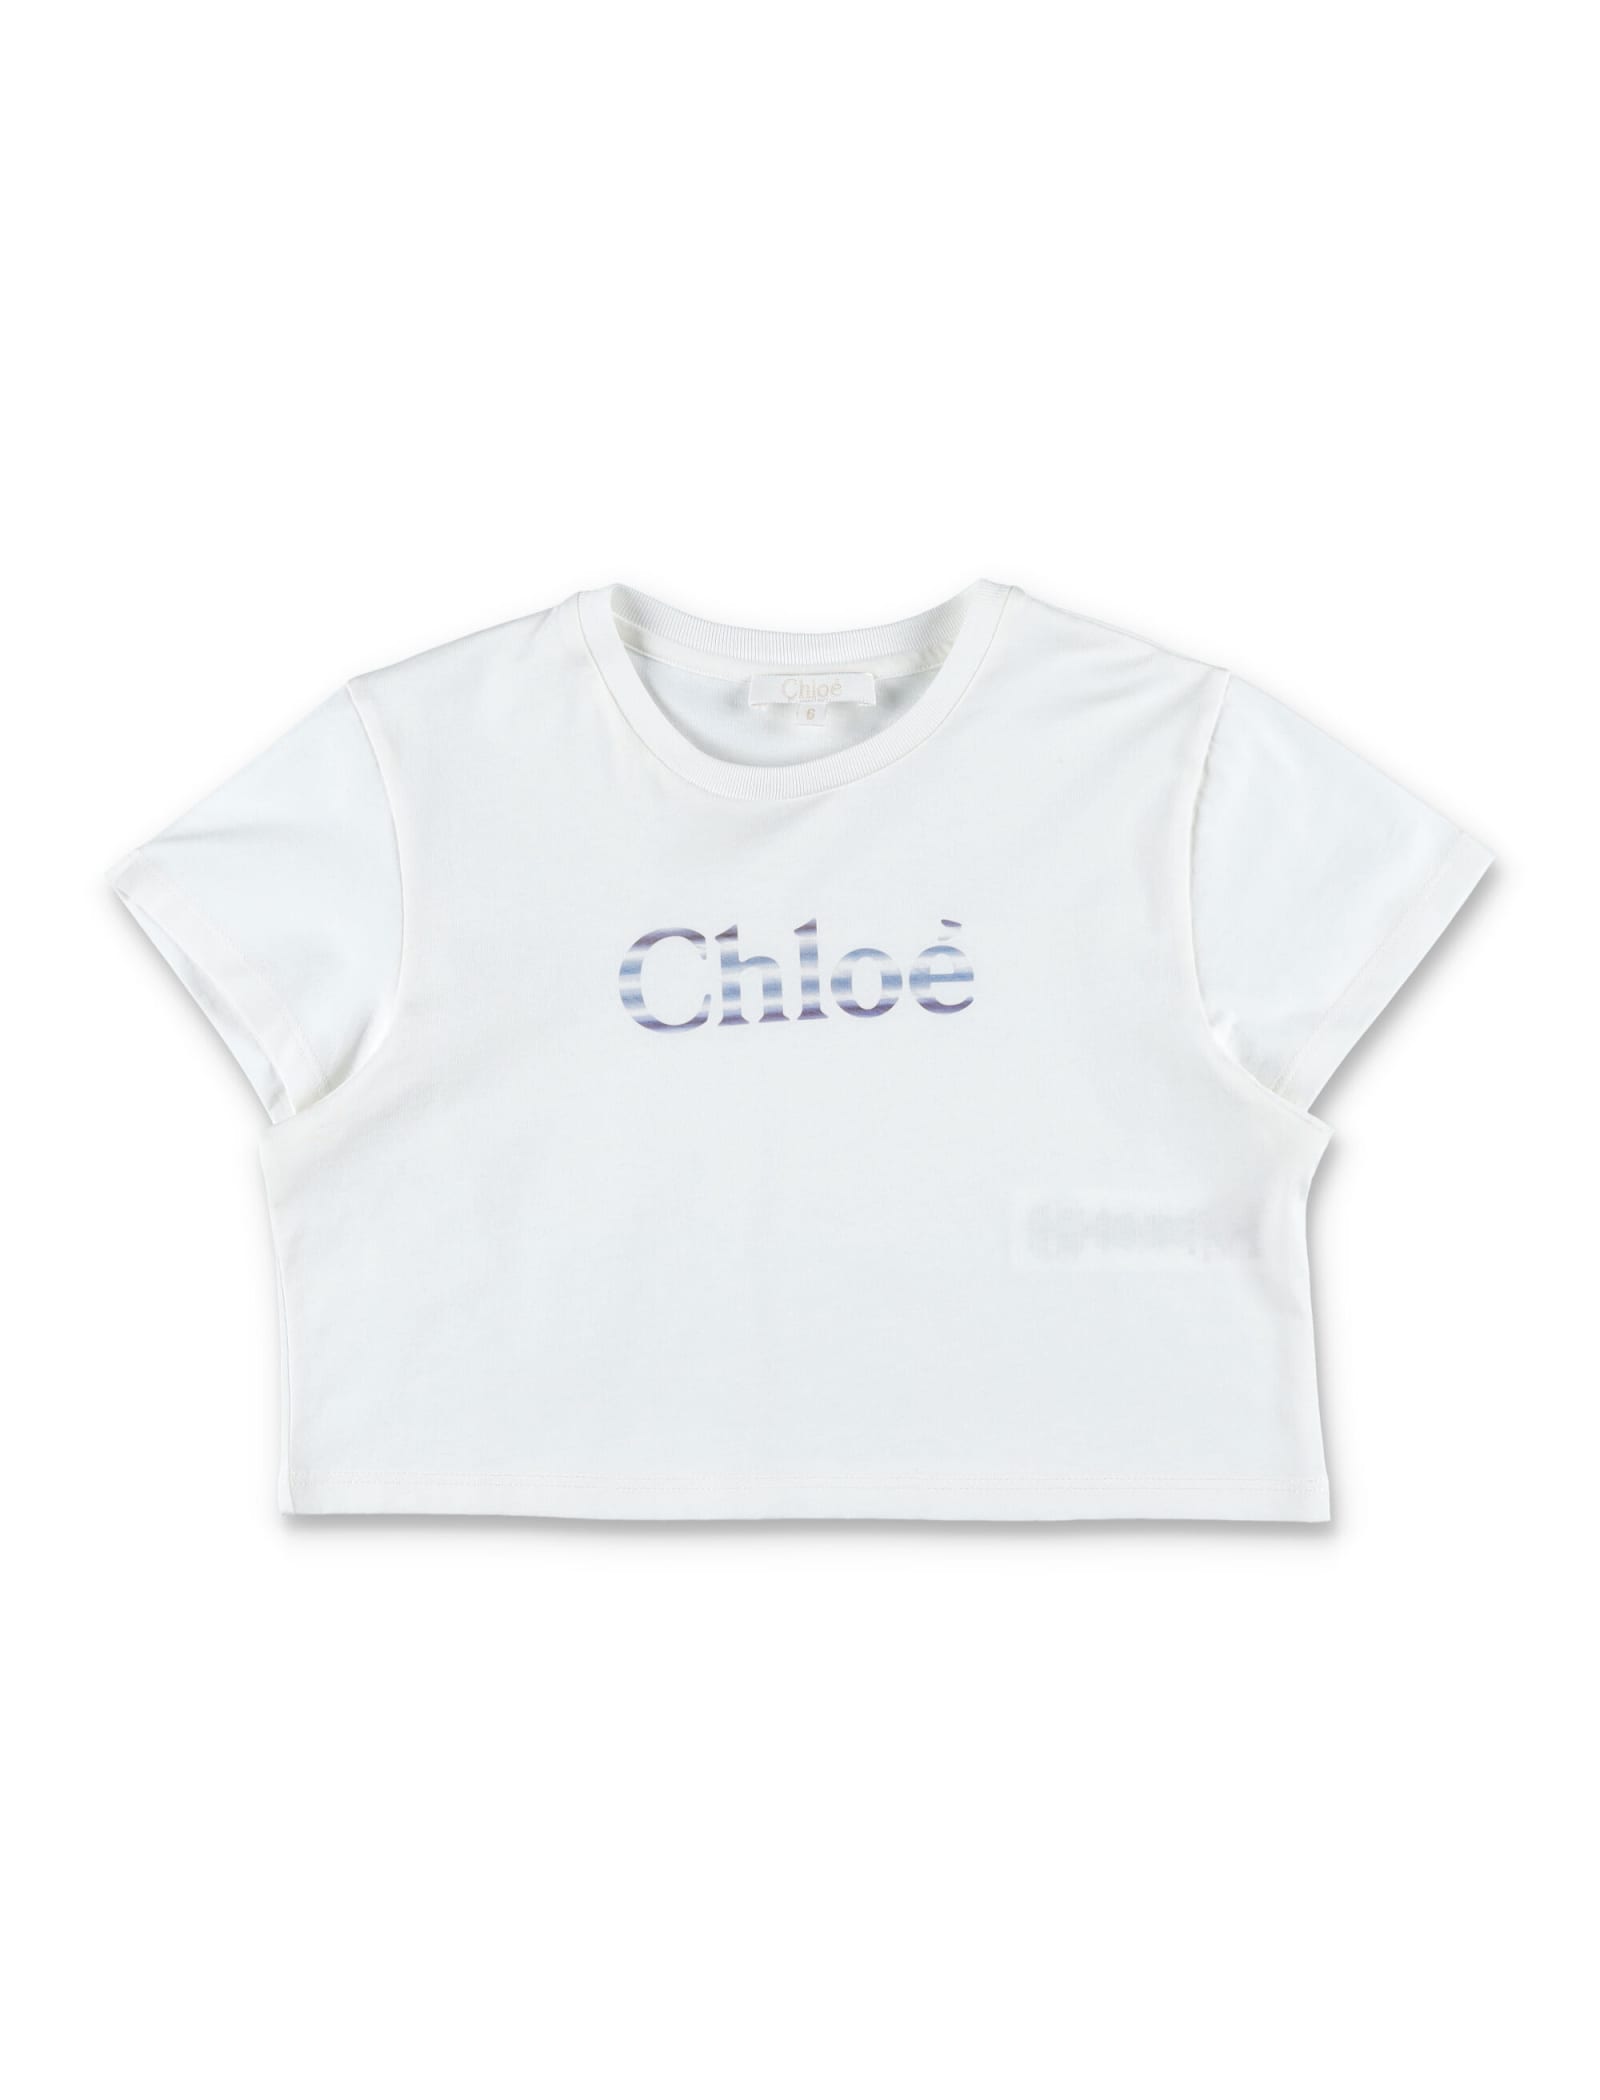 Chloé Kids' Cropped Logo T-shirt In White